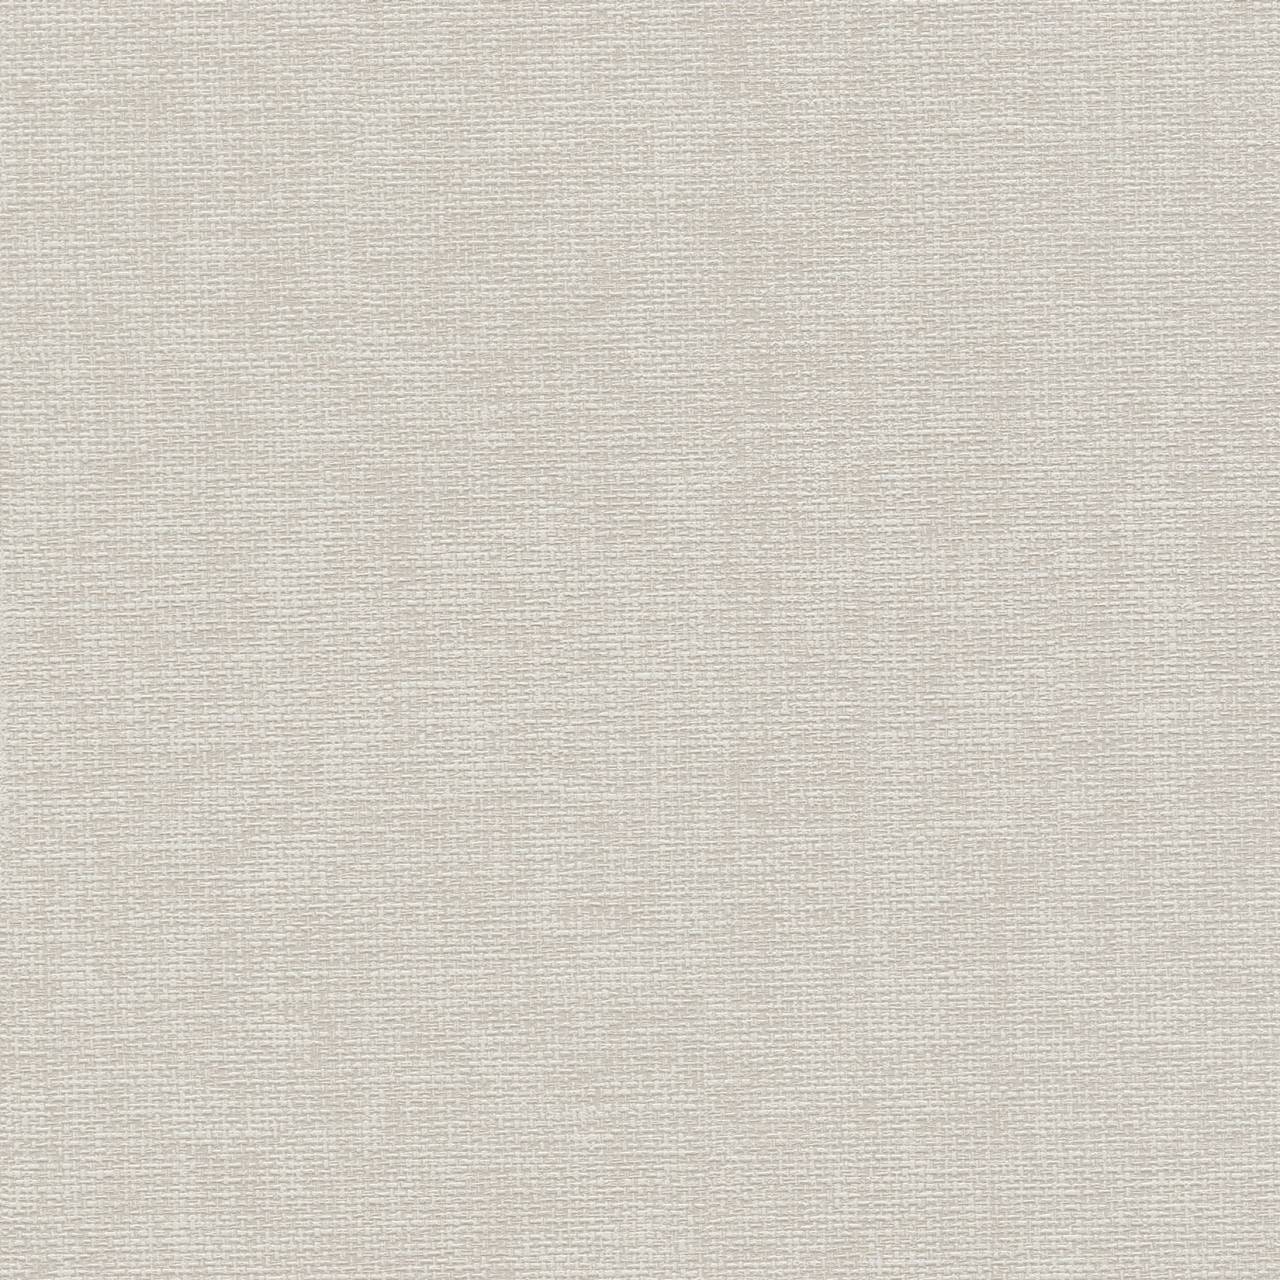 As fleece wallpaper #hygge fabric optics gray 386132